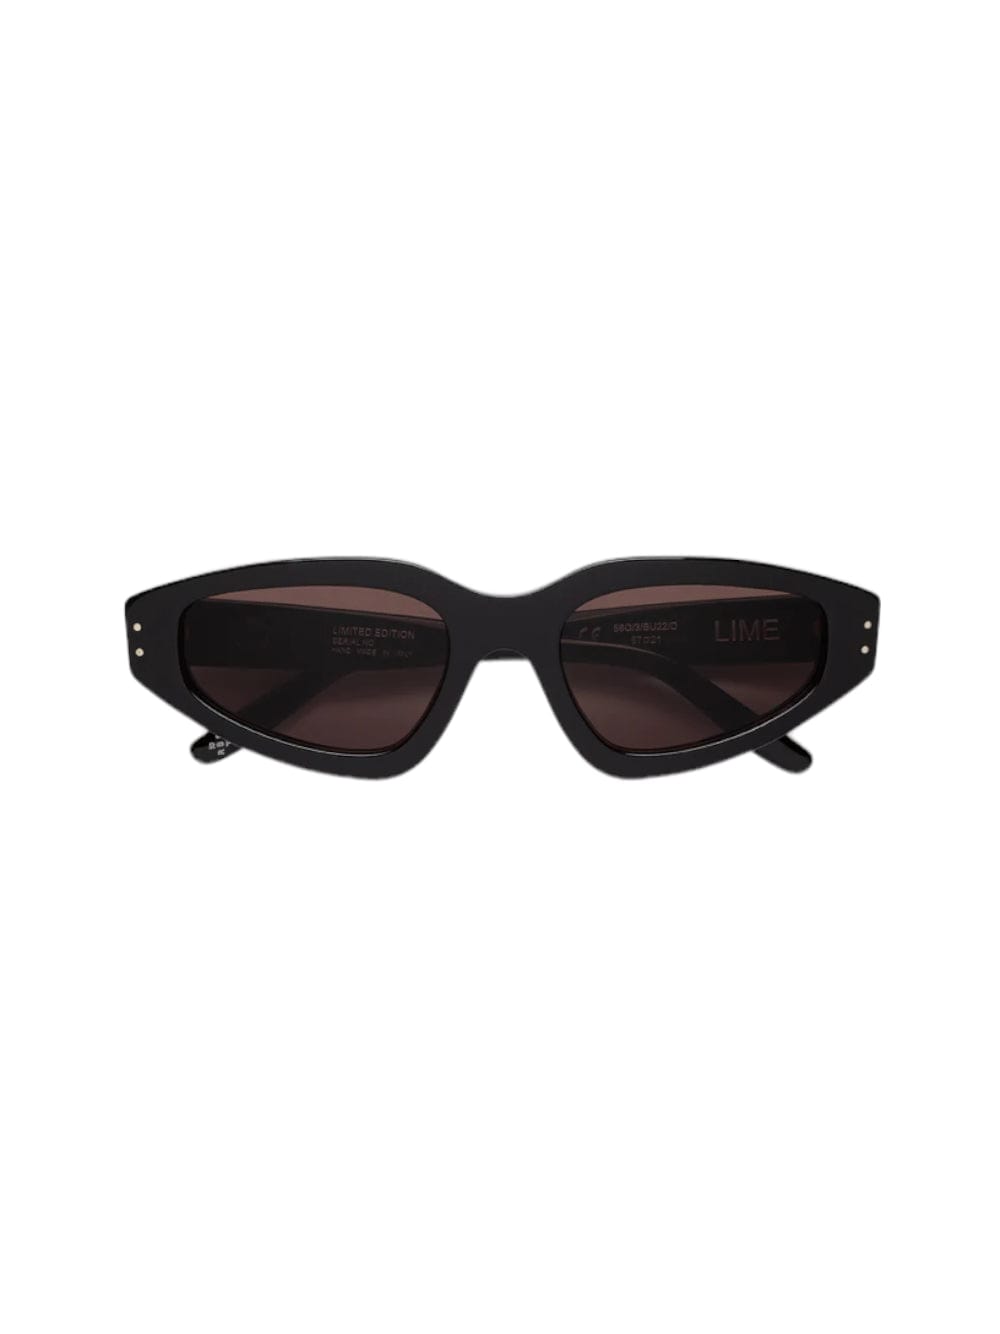 Shop Retrosuperfuture Lime - Limited Edition - Black Sunglasses